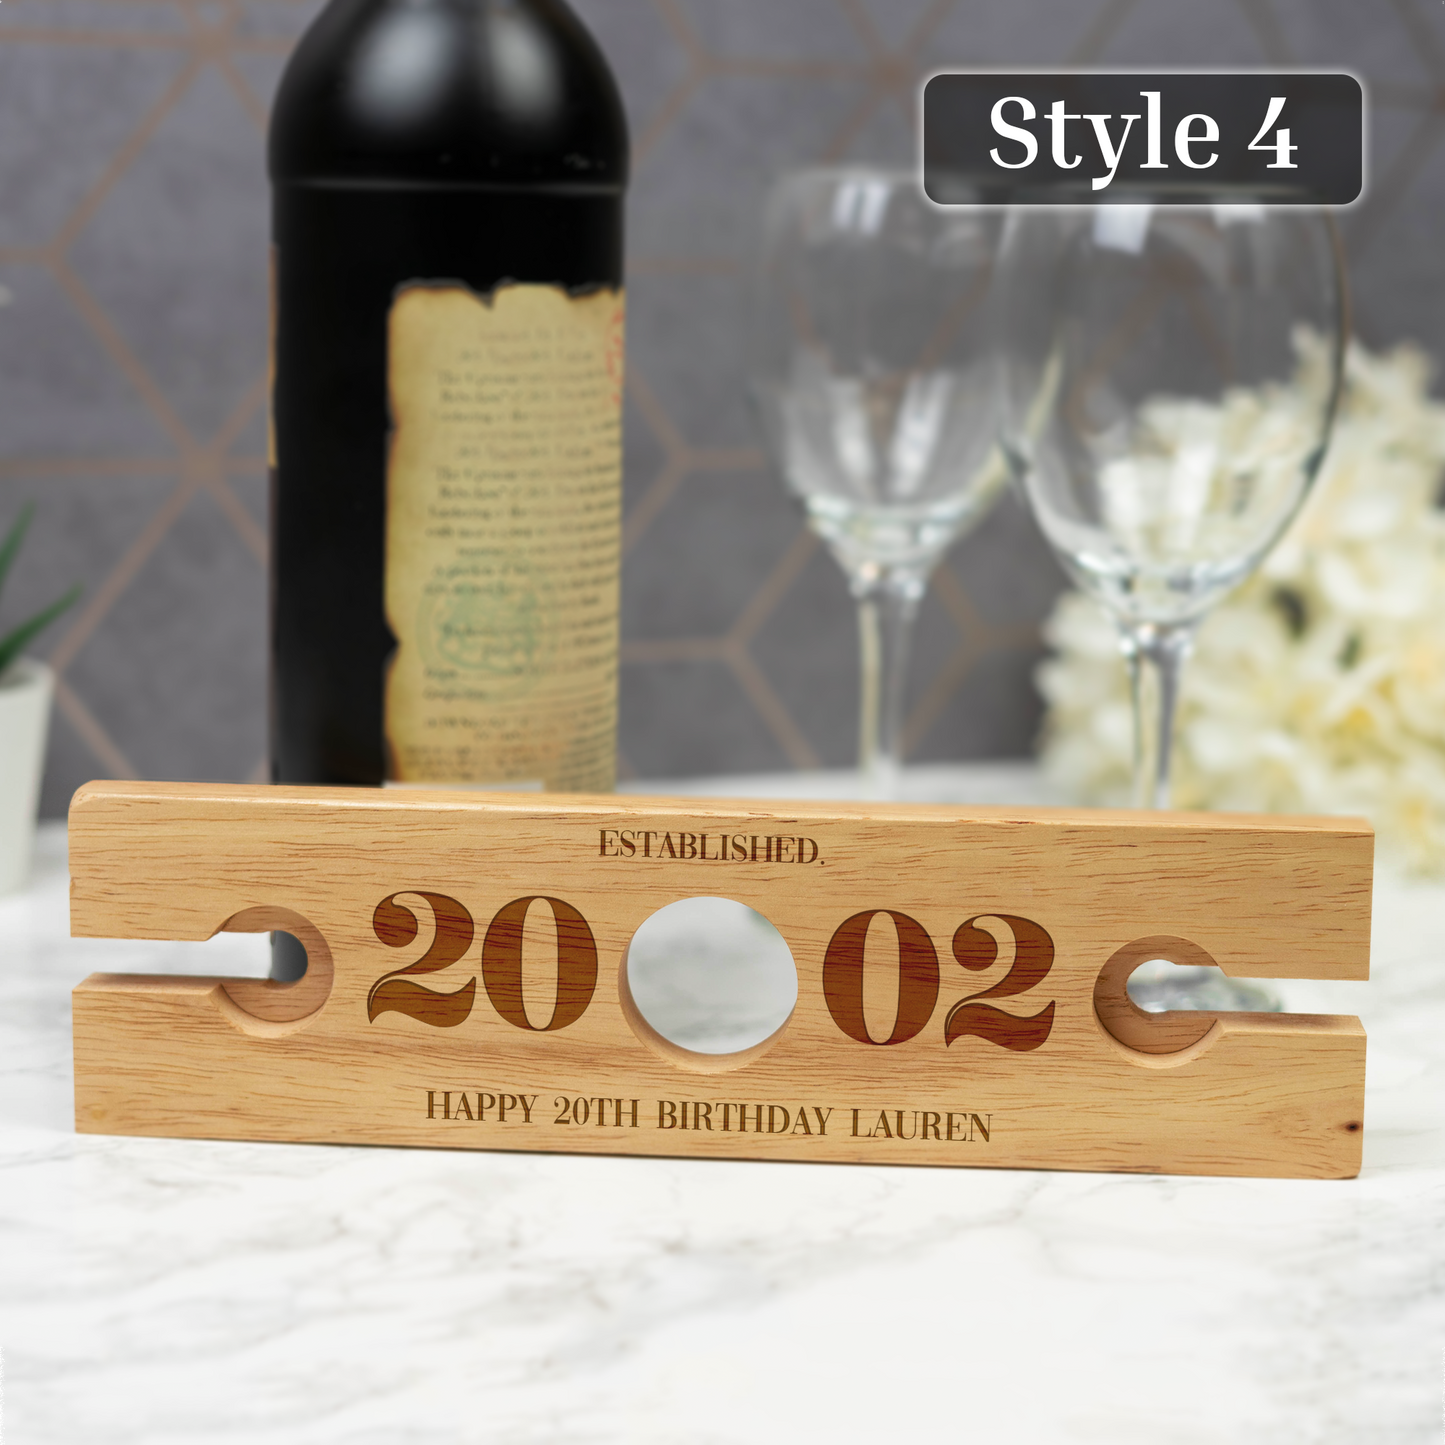 Personalised Engraved Wooden Wine Bottle Glass Holder